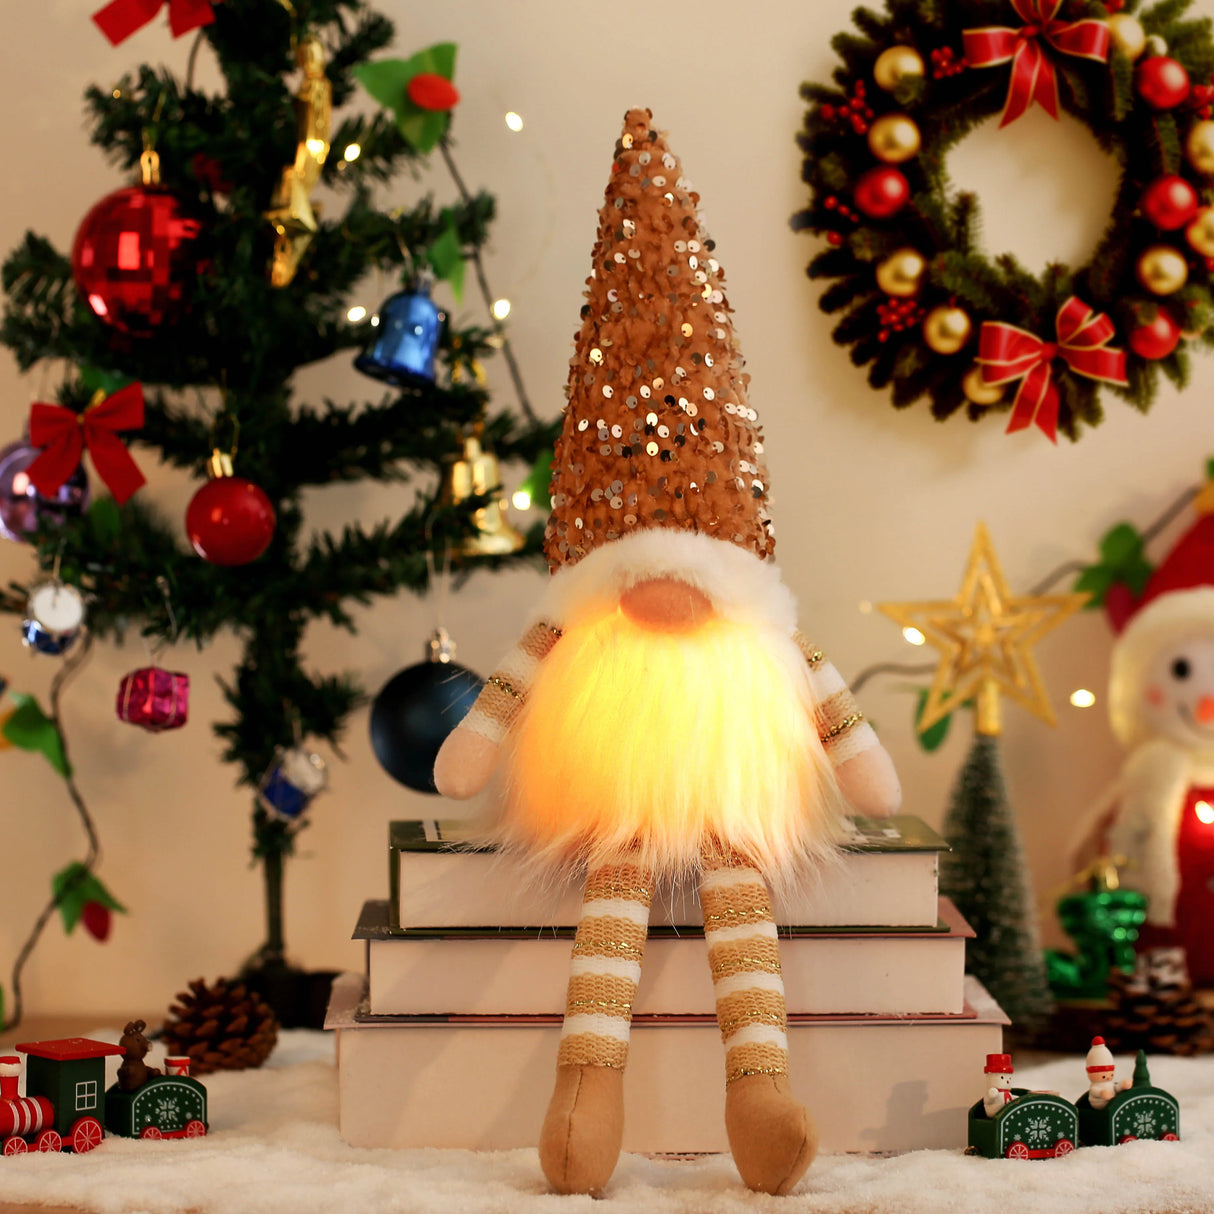 Dropship Christmas Snowman Decor Dolls, Indoor Home Decoration